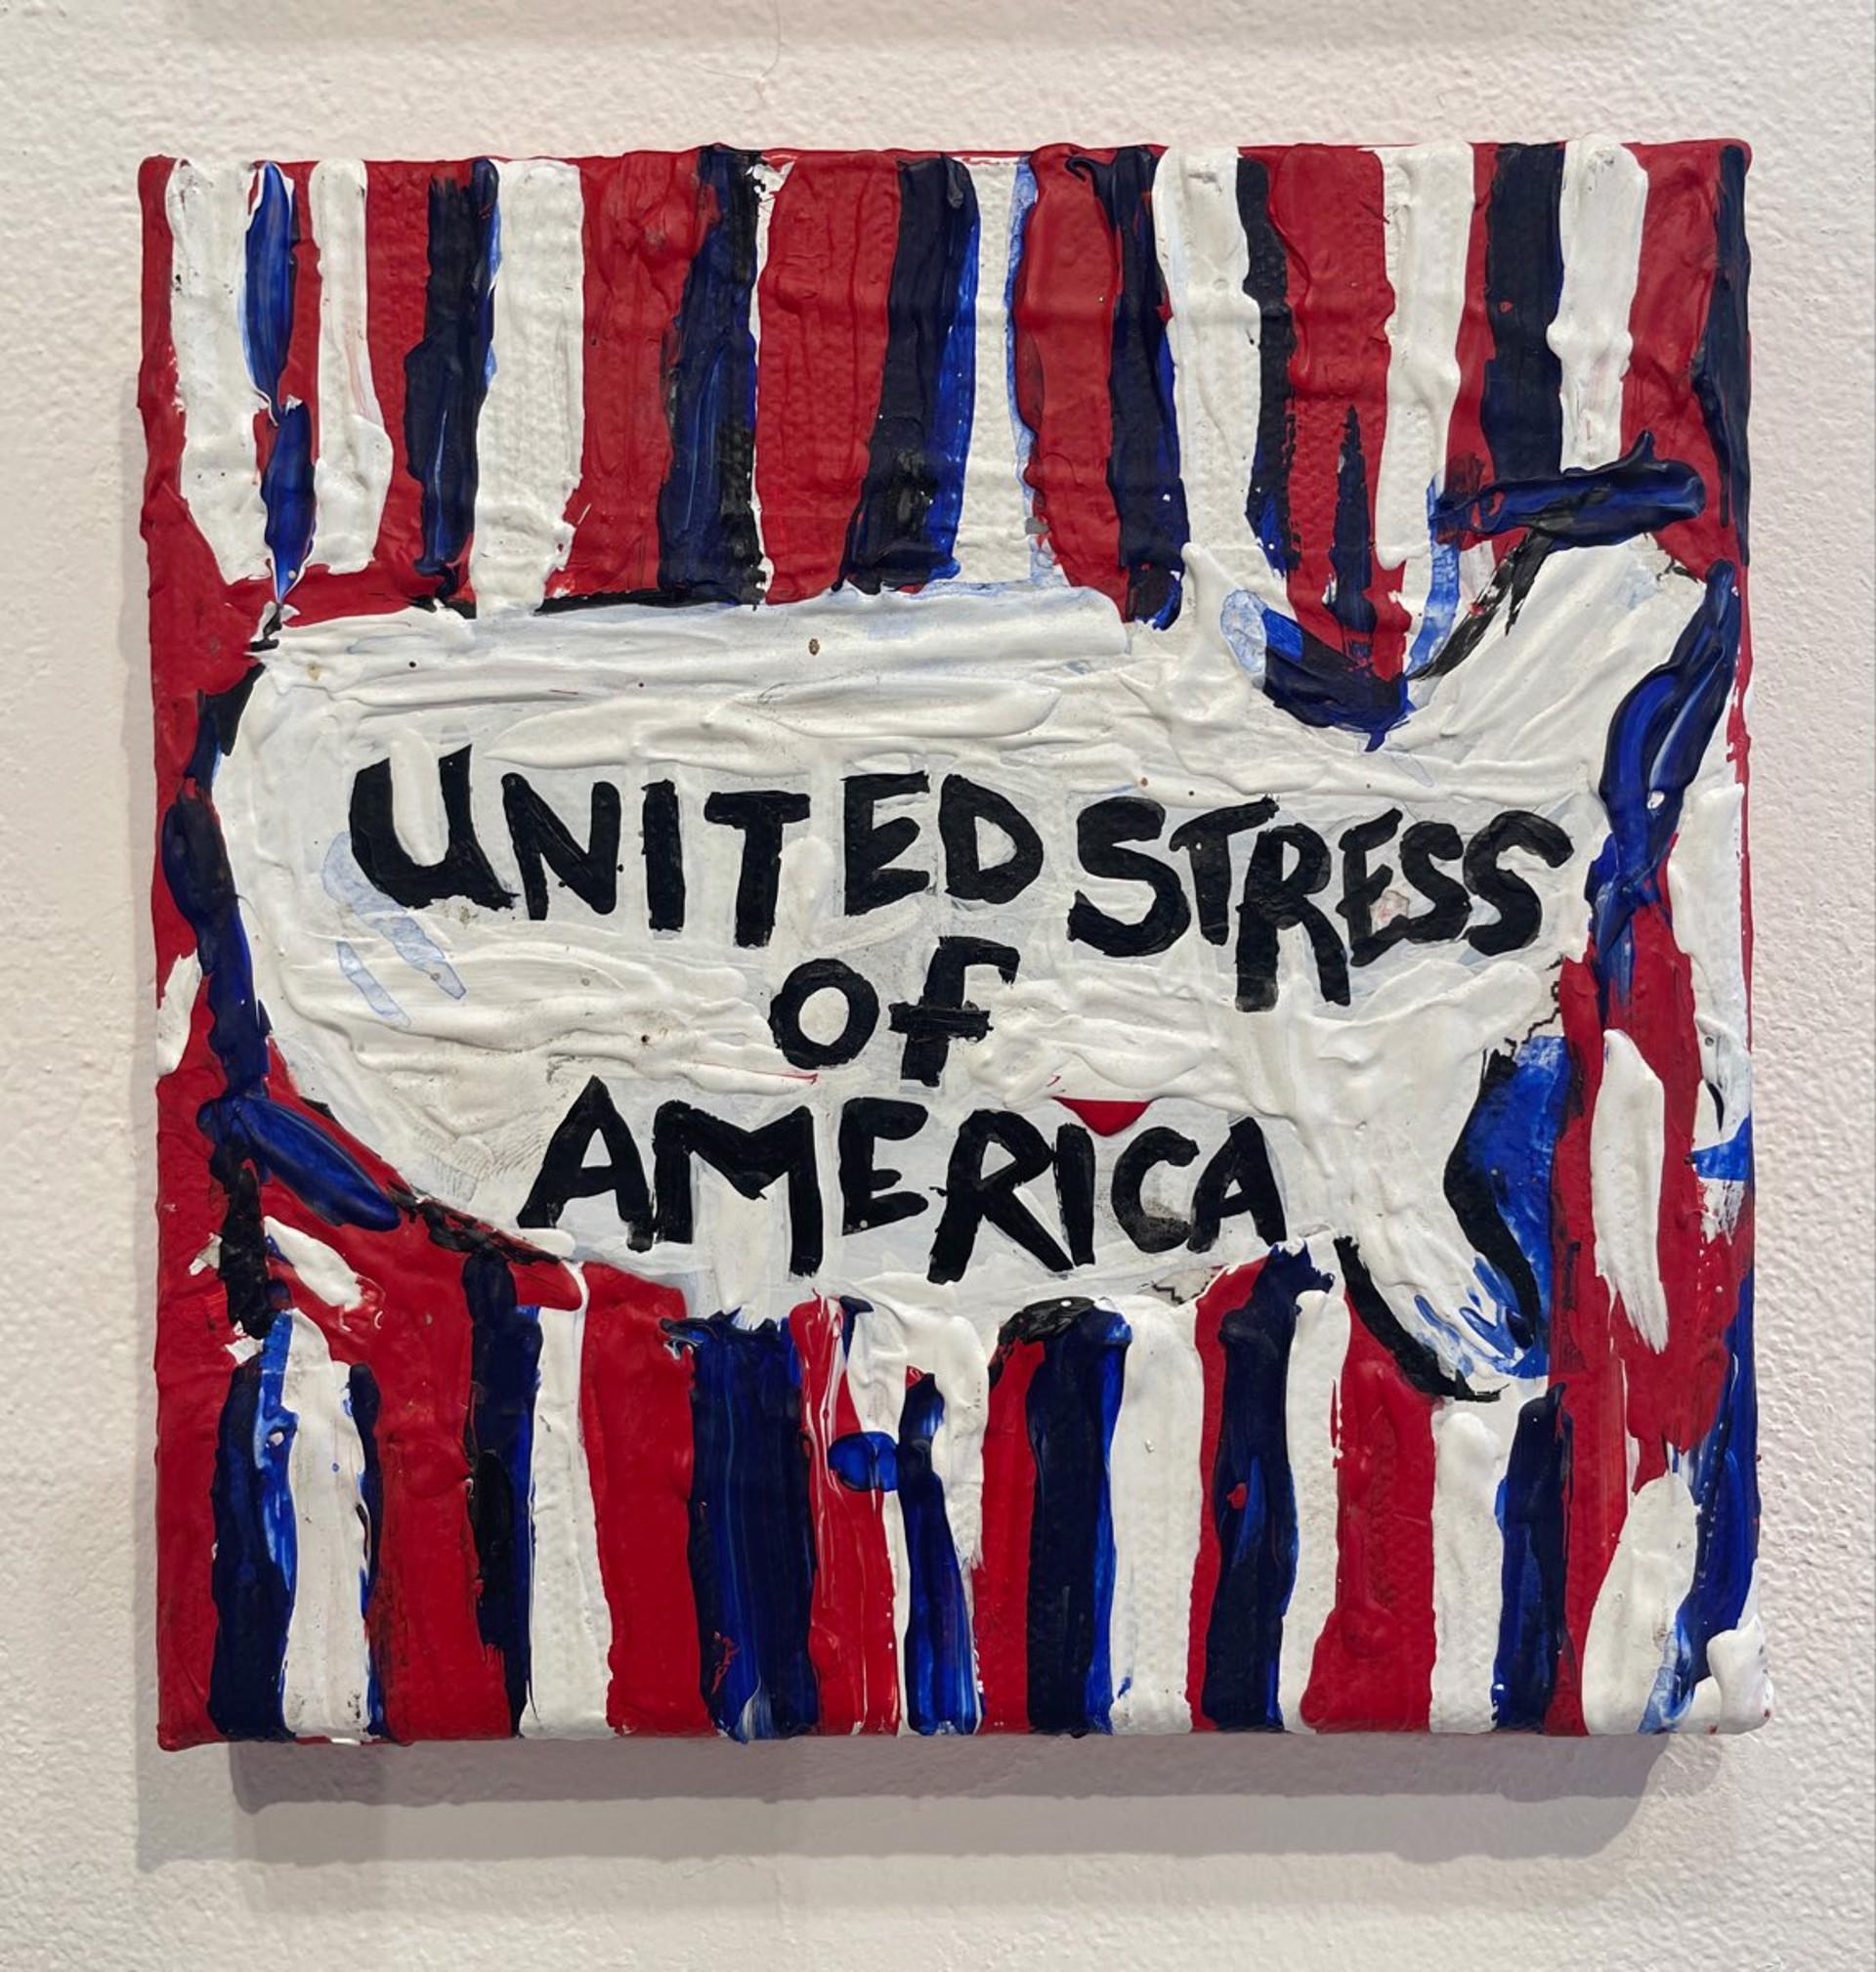 Linda Smith Figurative Painting - United Stress of America 4, 2017